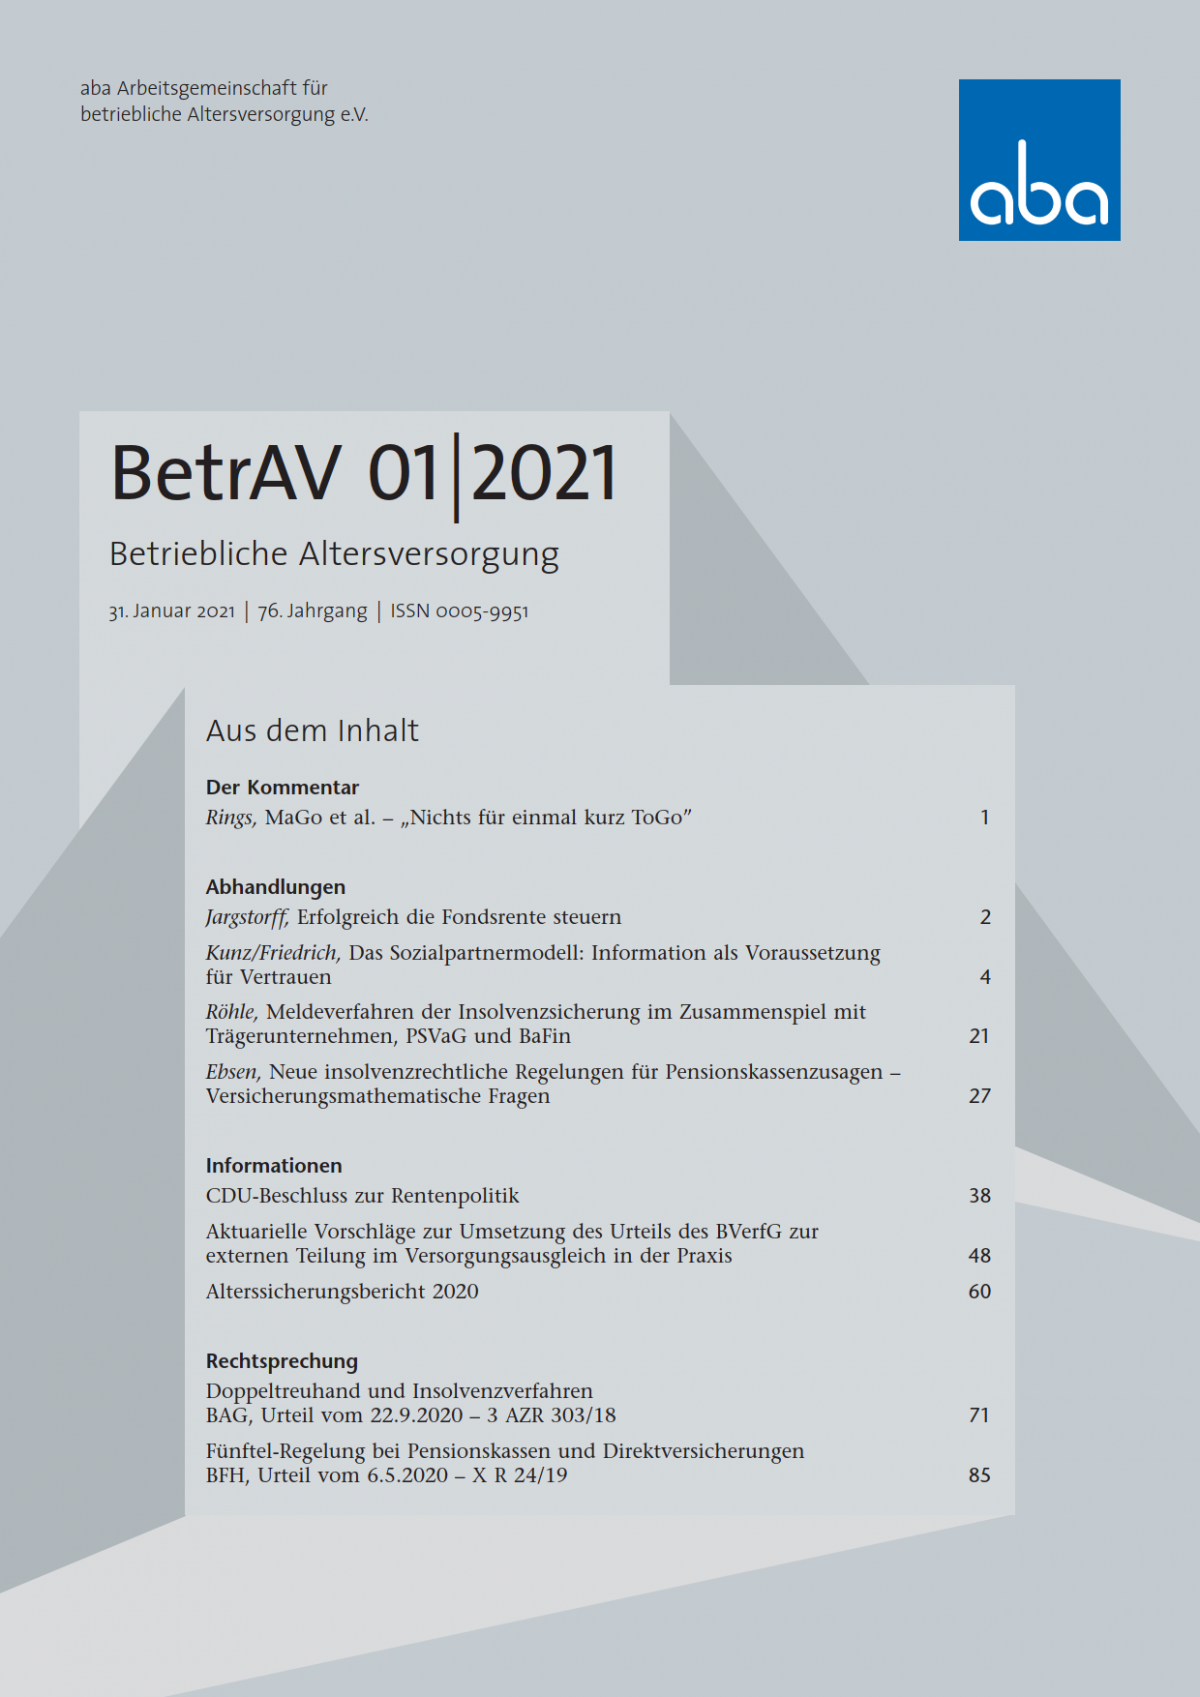 BetrAV-Ausgabe 1/2021 erschienen